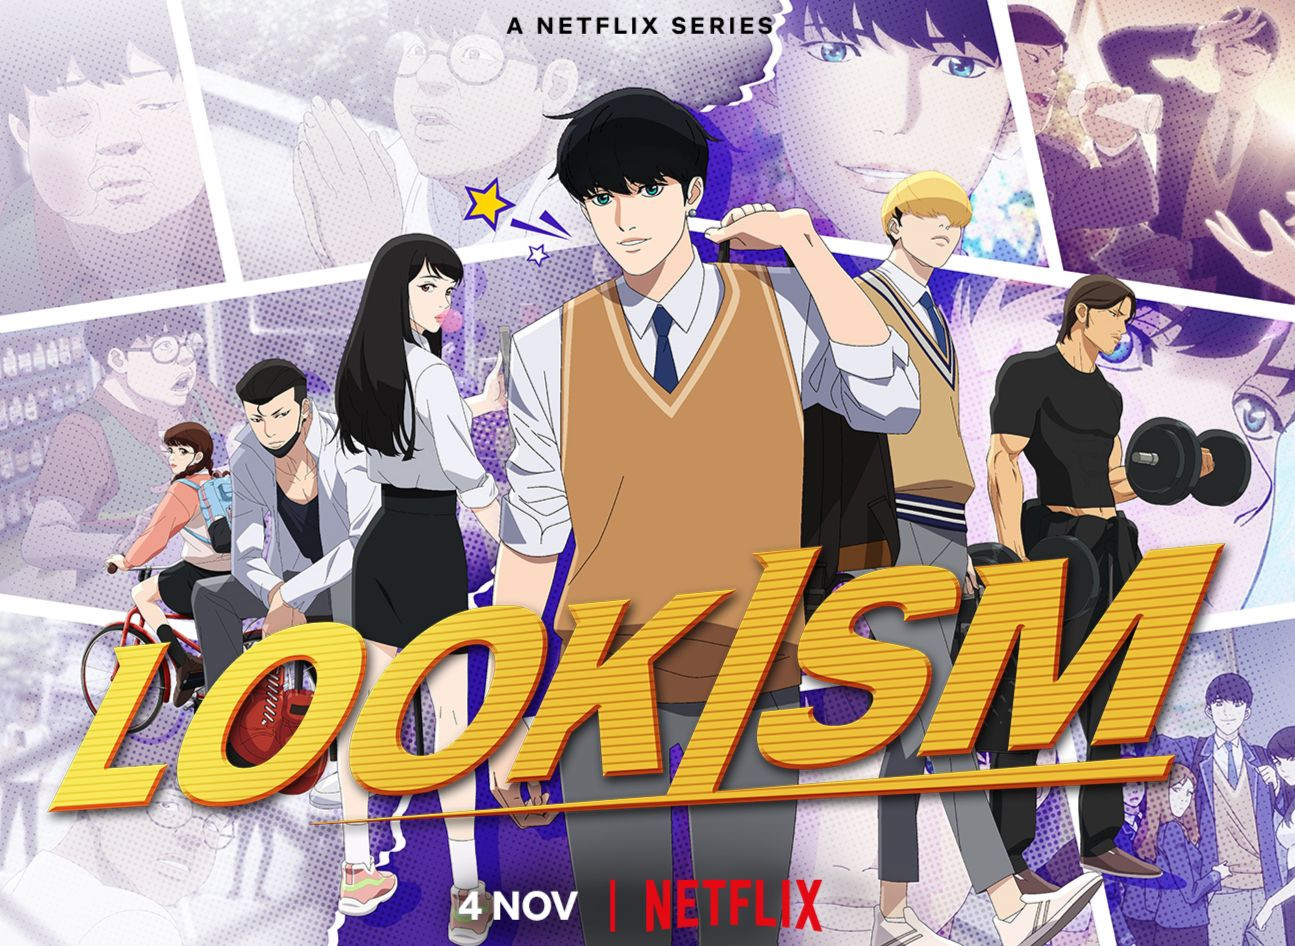 Webtoon Populer “Lookism” Diadaptasi Jadi Animasi Oleh Netflix